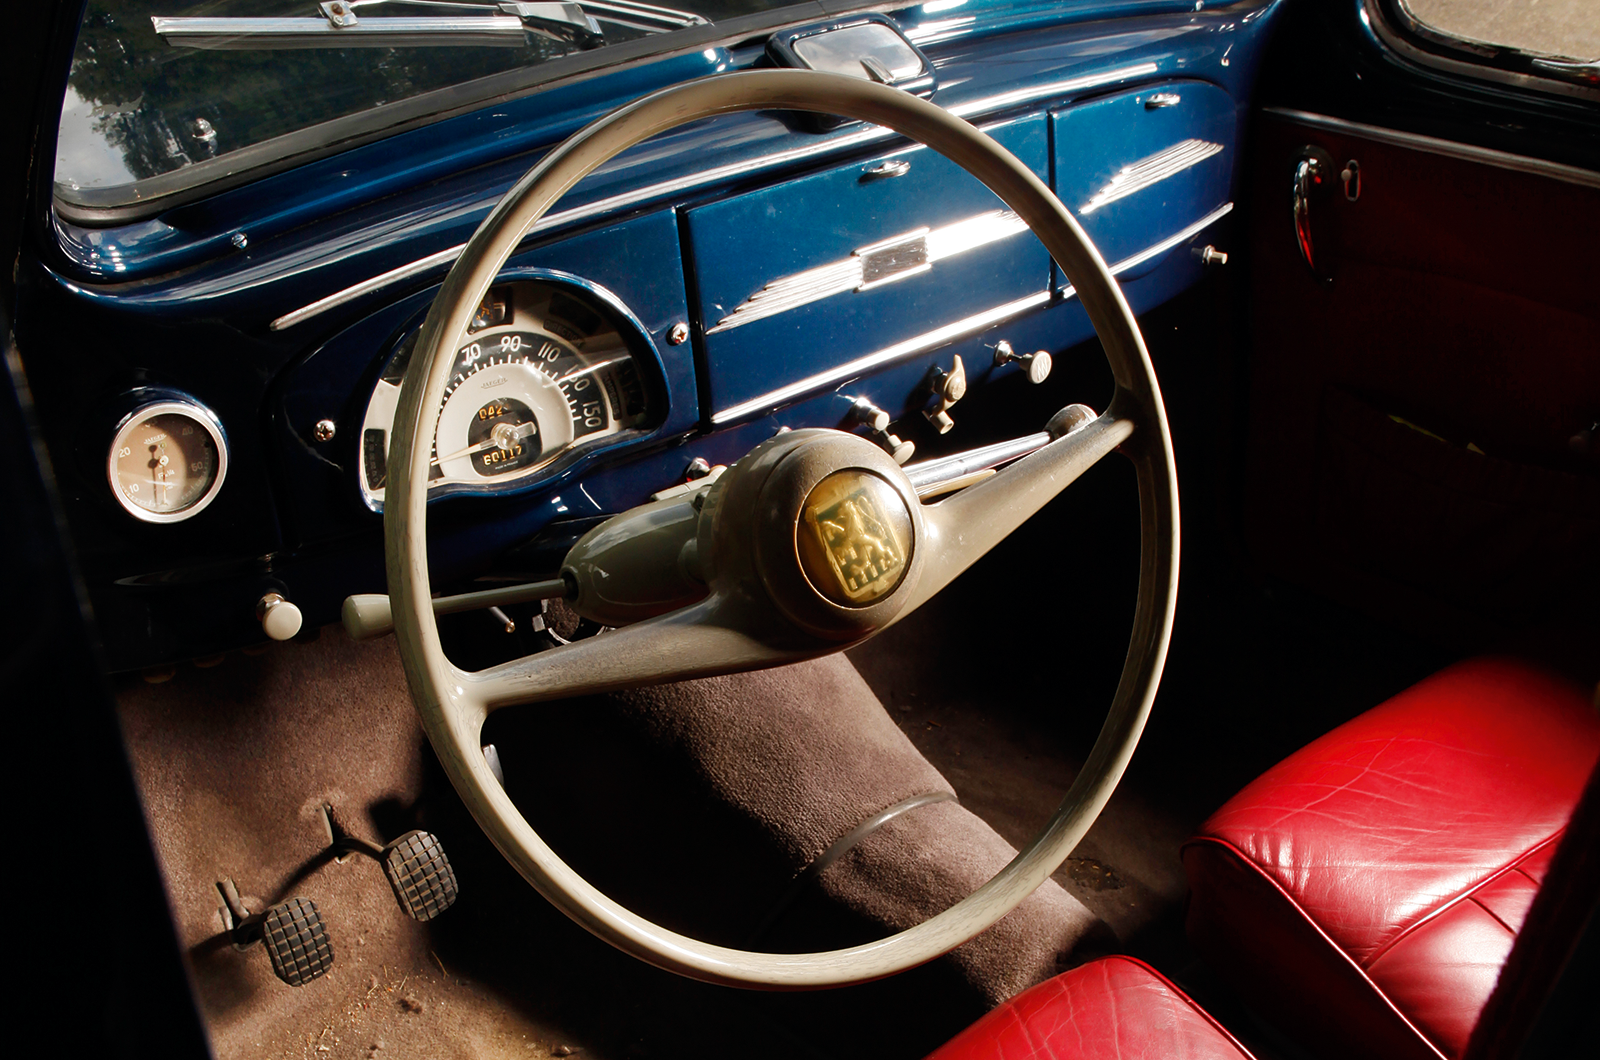 Classic & Sports Car – Peugeot 203 Spécial Darl’mat: France’s unlikeliest sports saloon?